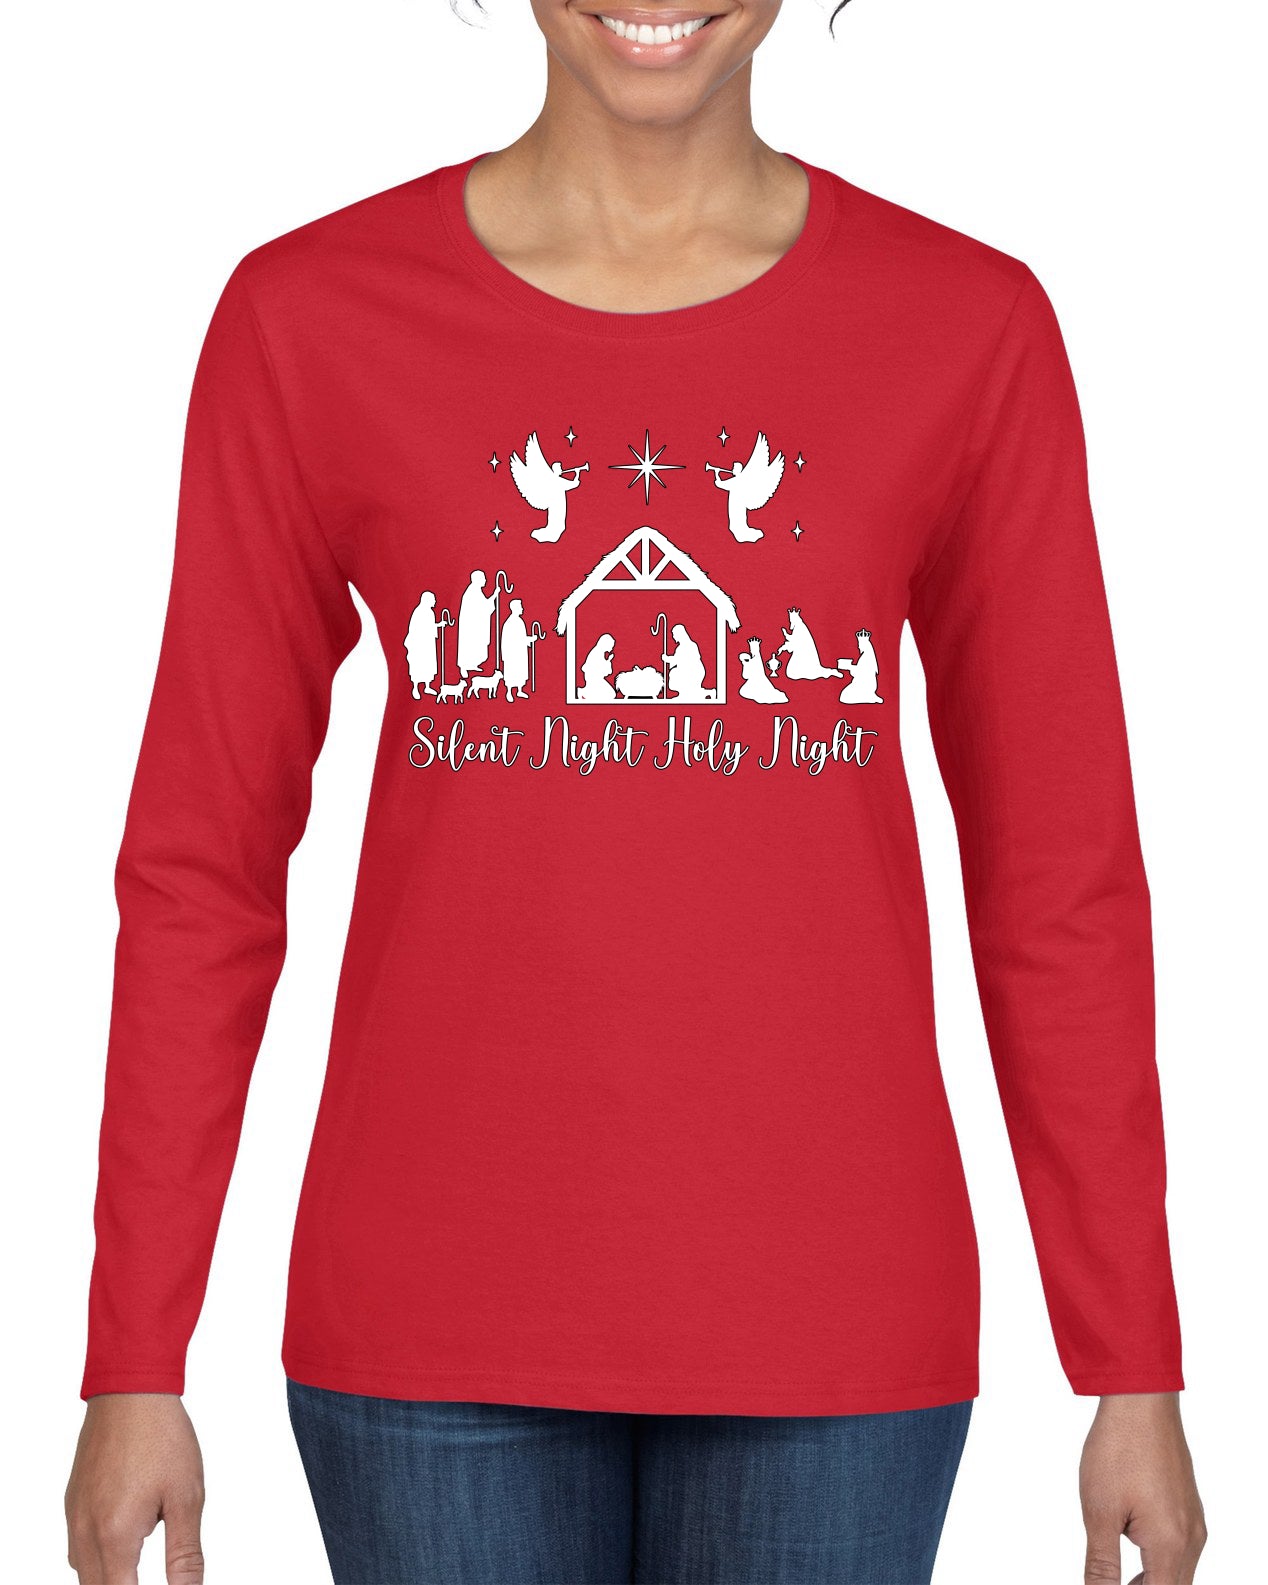 Silent Night Holy Night Religious Jesus Christmas Womens Graphic Long Sleeve T-Shirt